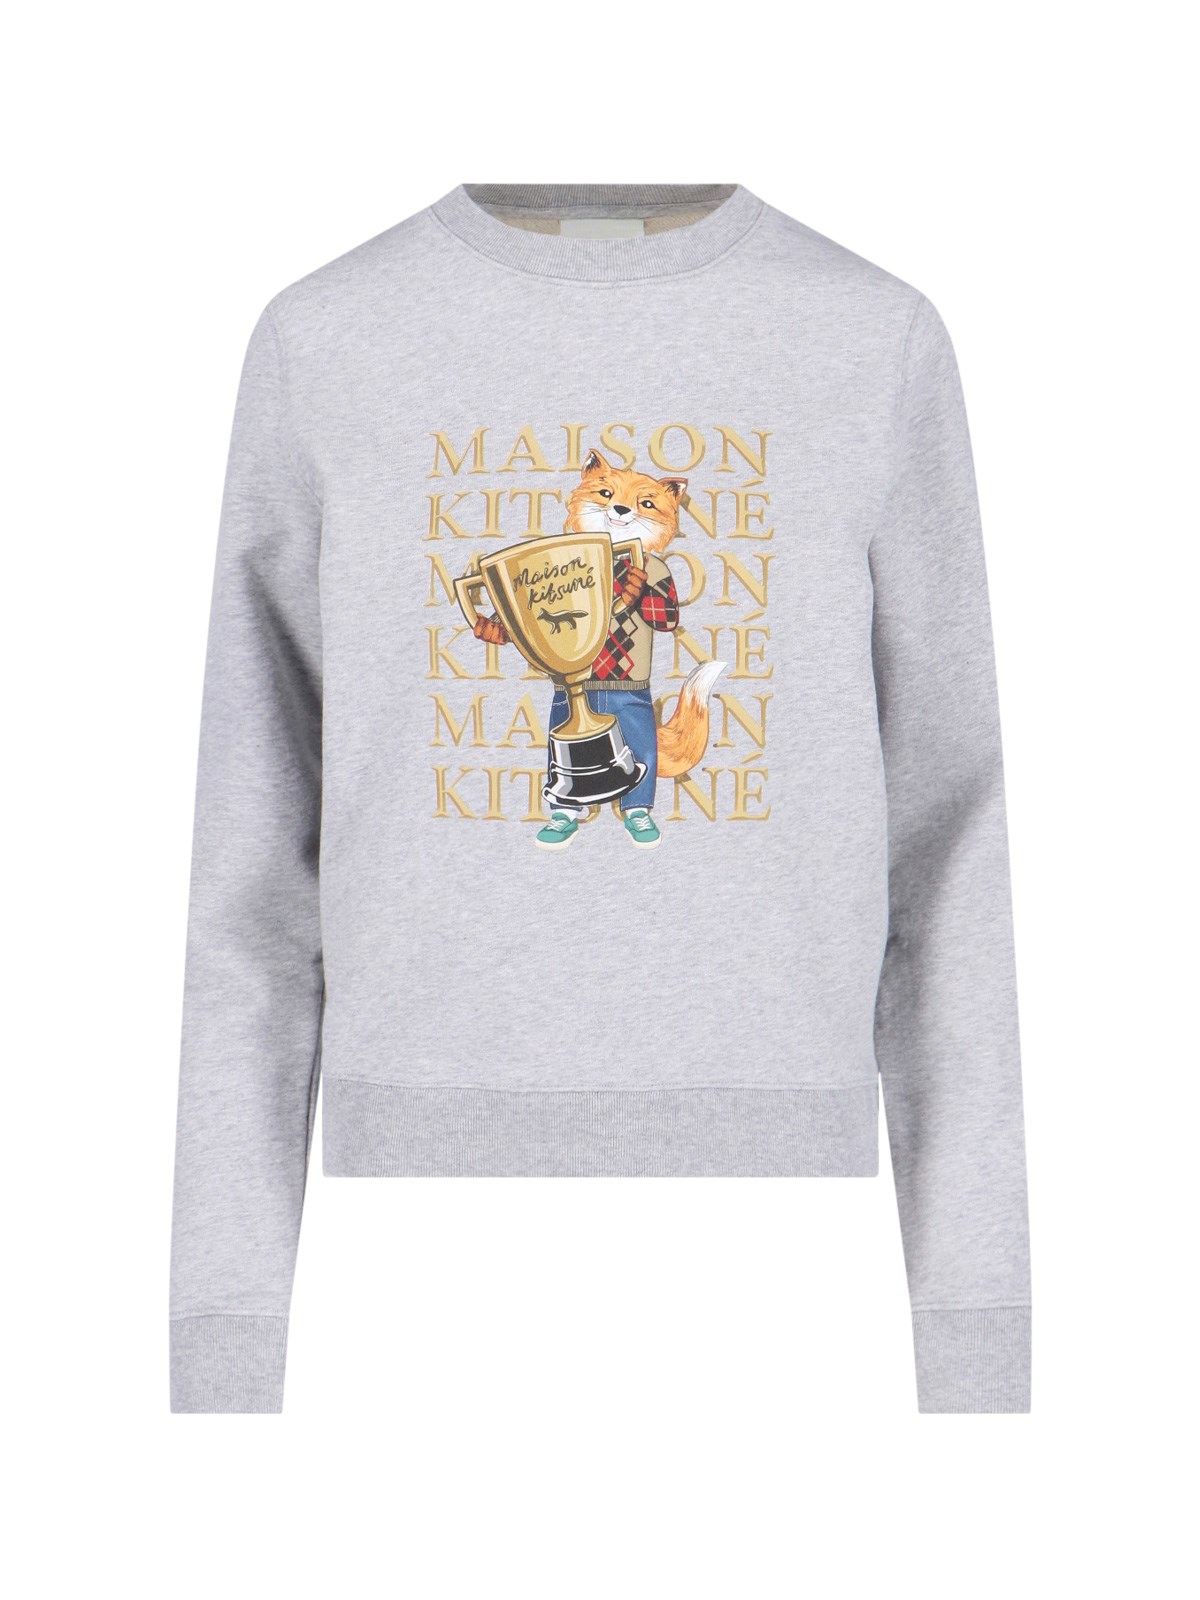 Maison Kitsuné "fox Champion" Crew Neck Sweatshirt In Grey